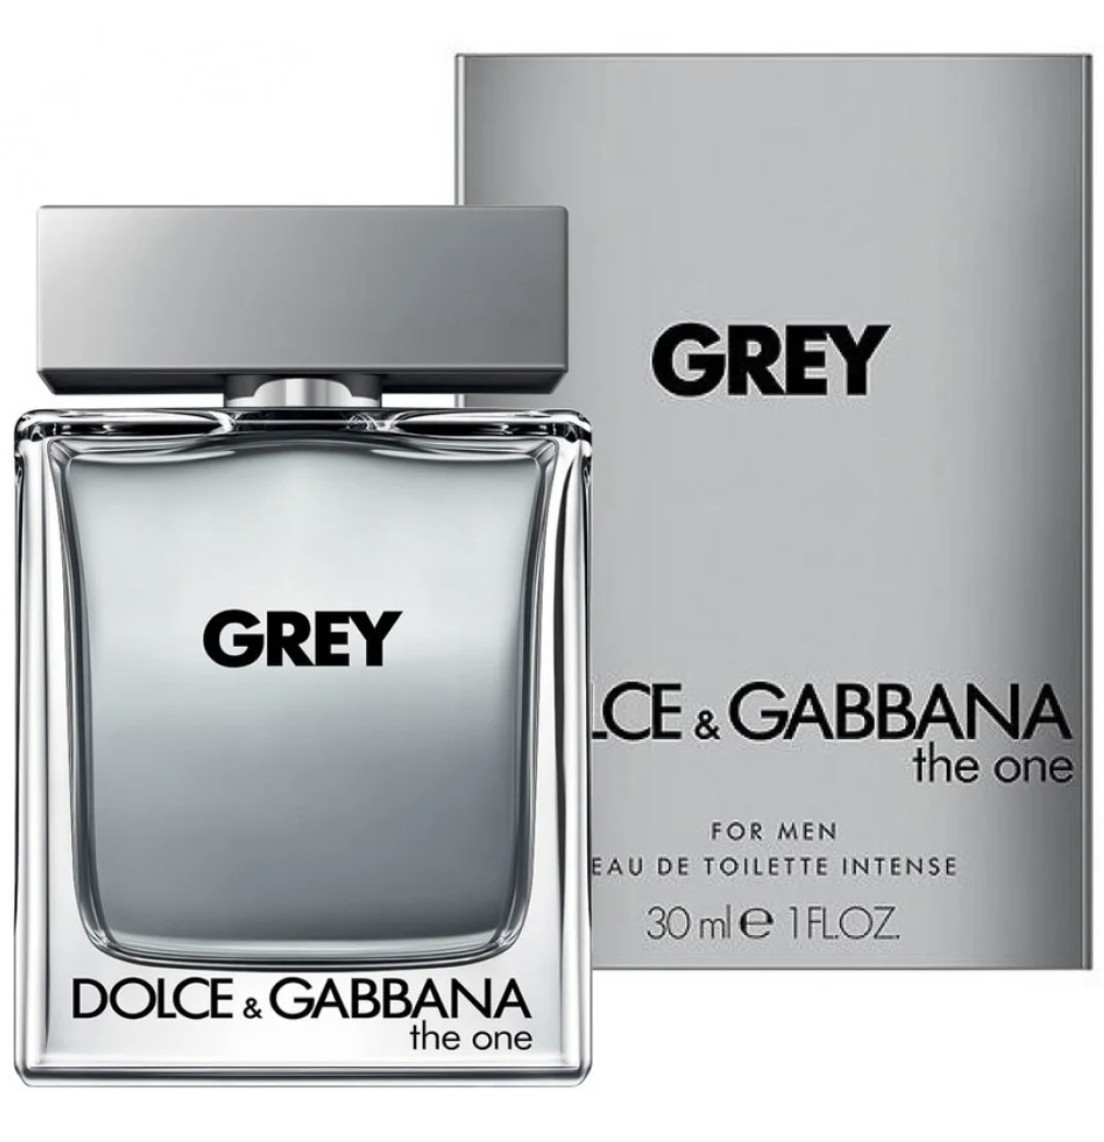 dolce and gabbana gray perfume